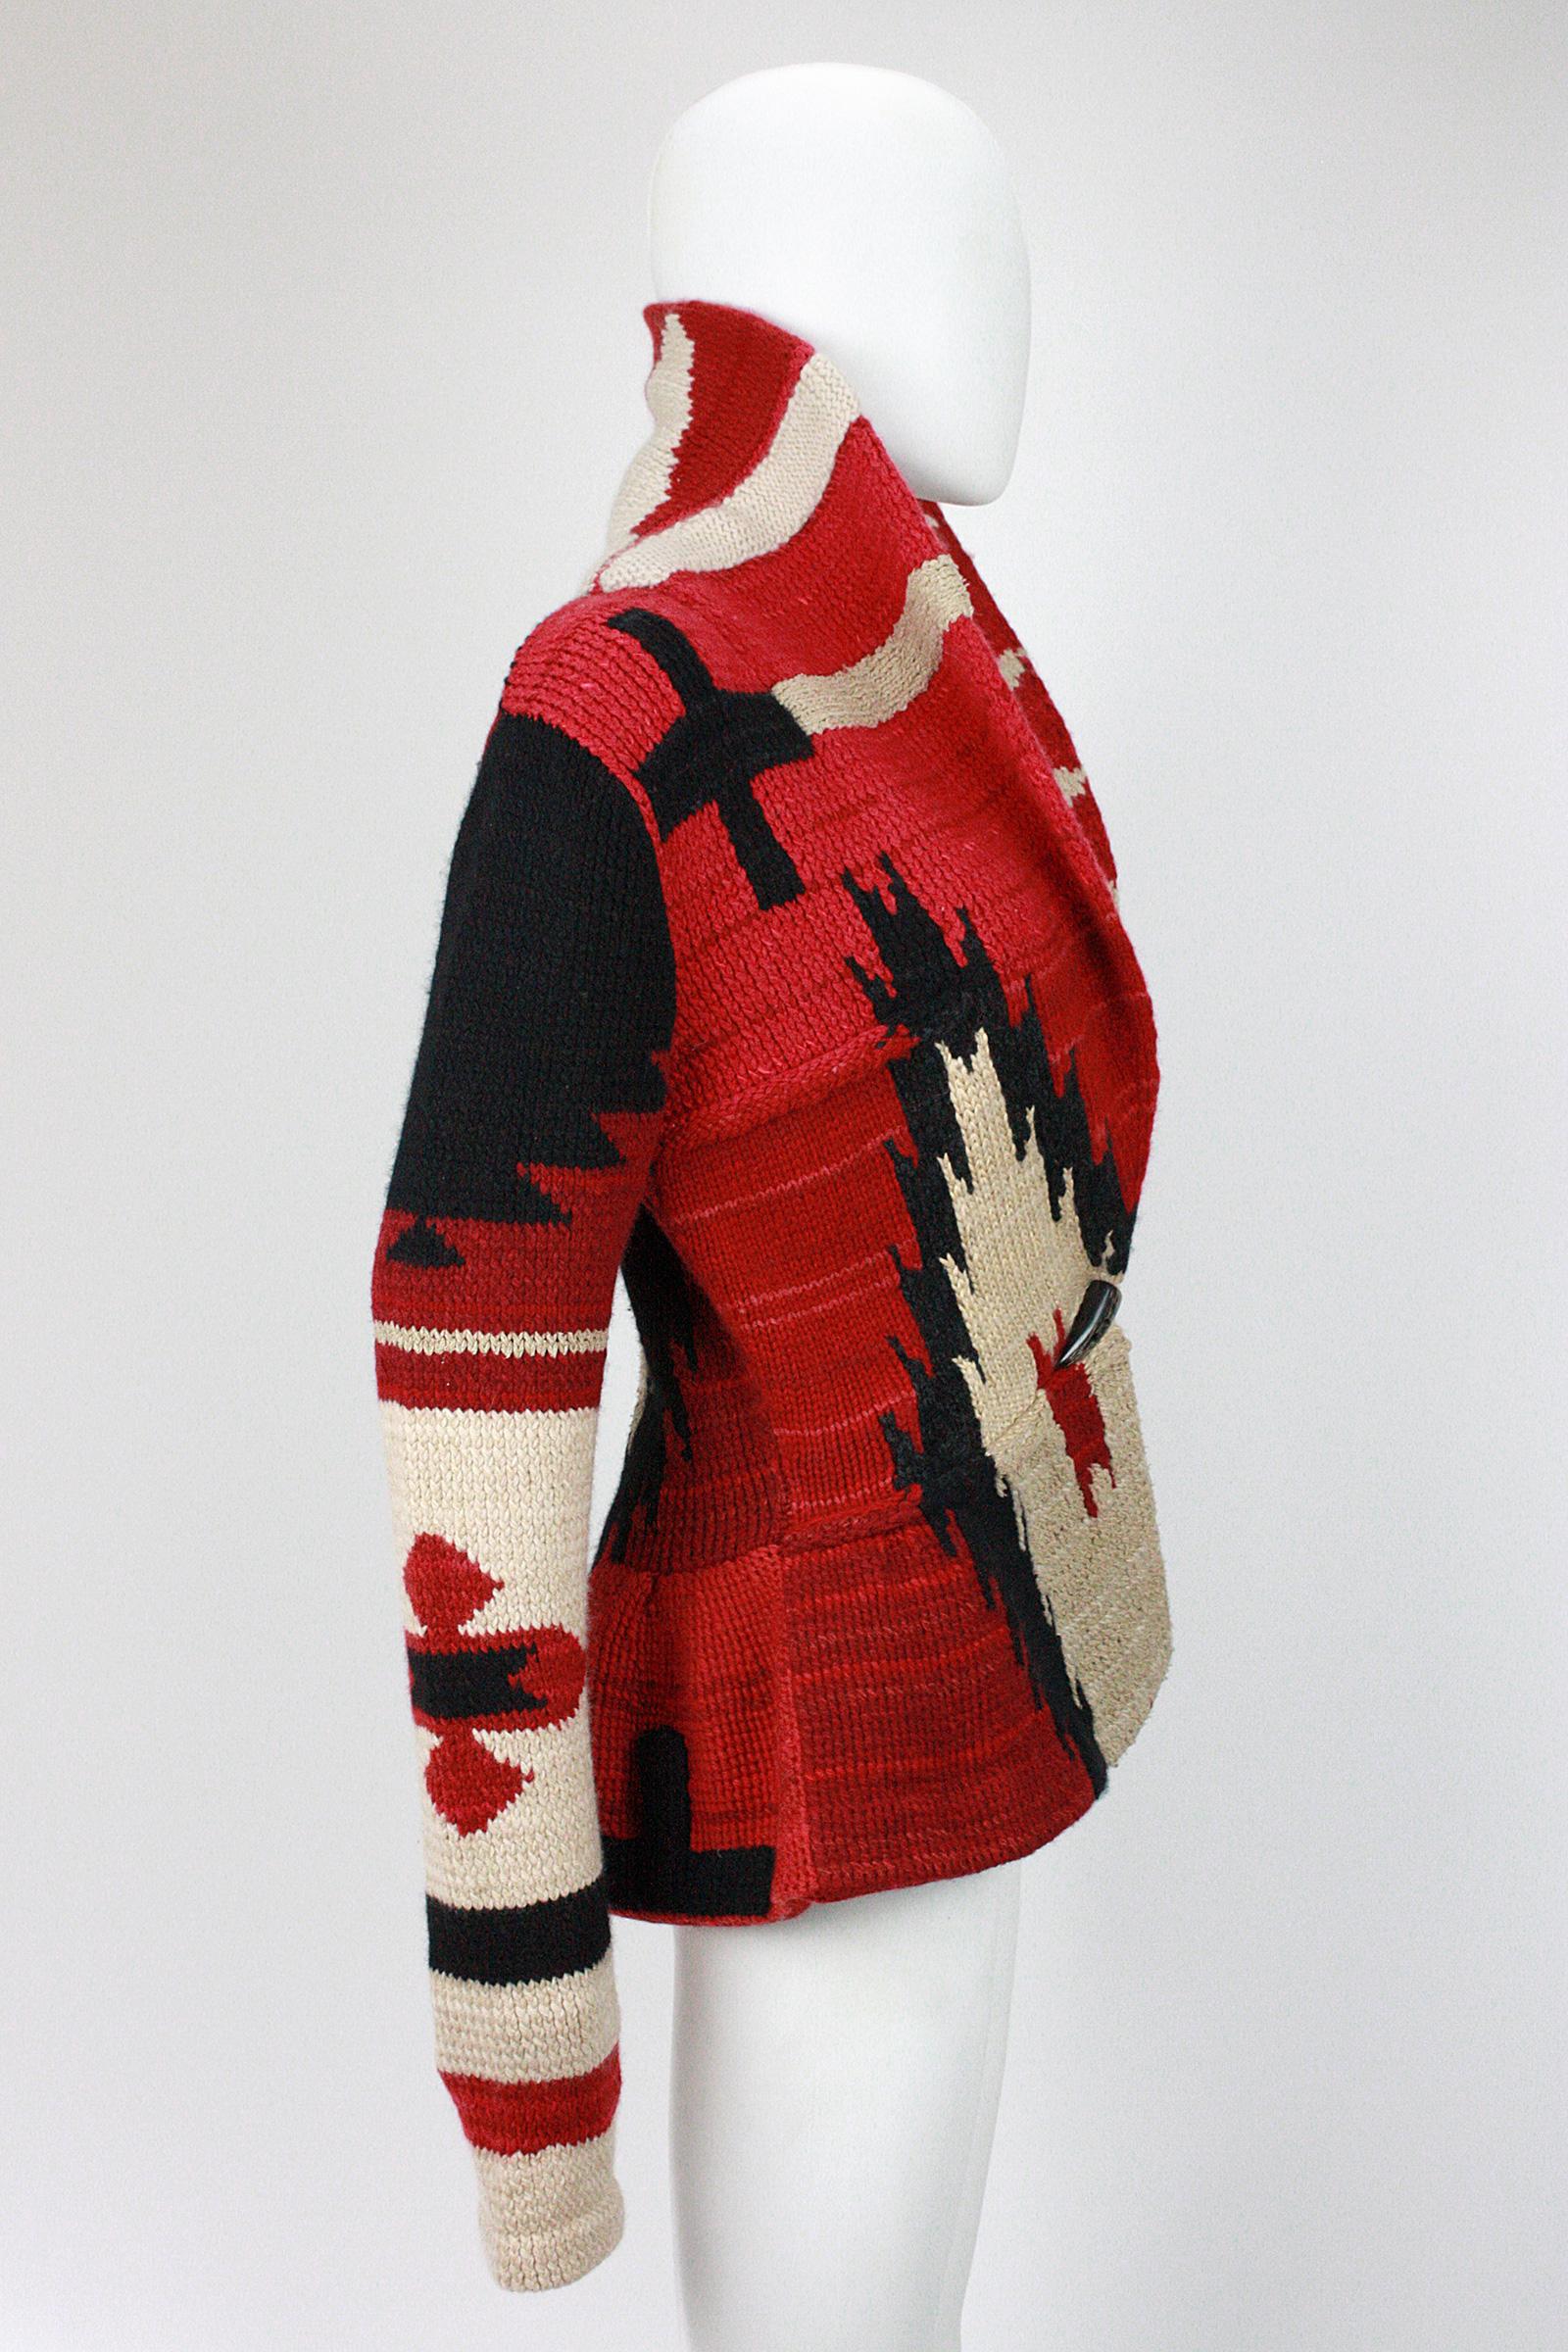 ralph lauren southwestern sweater